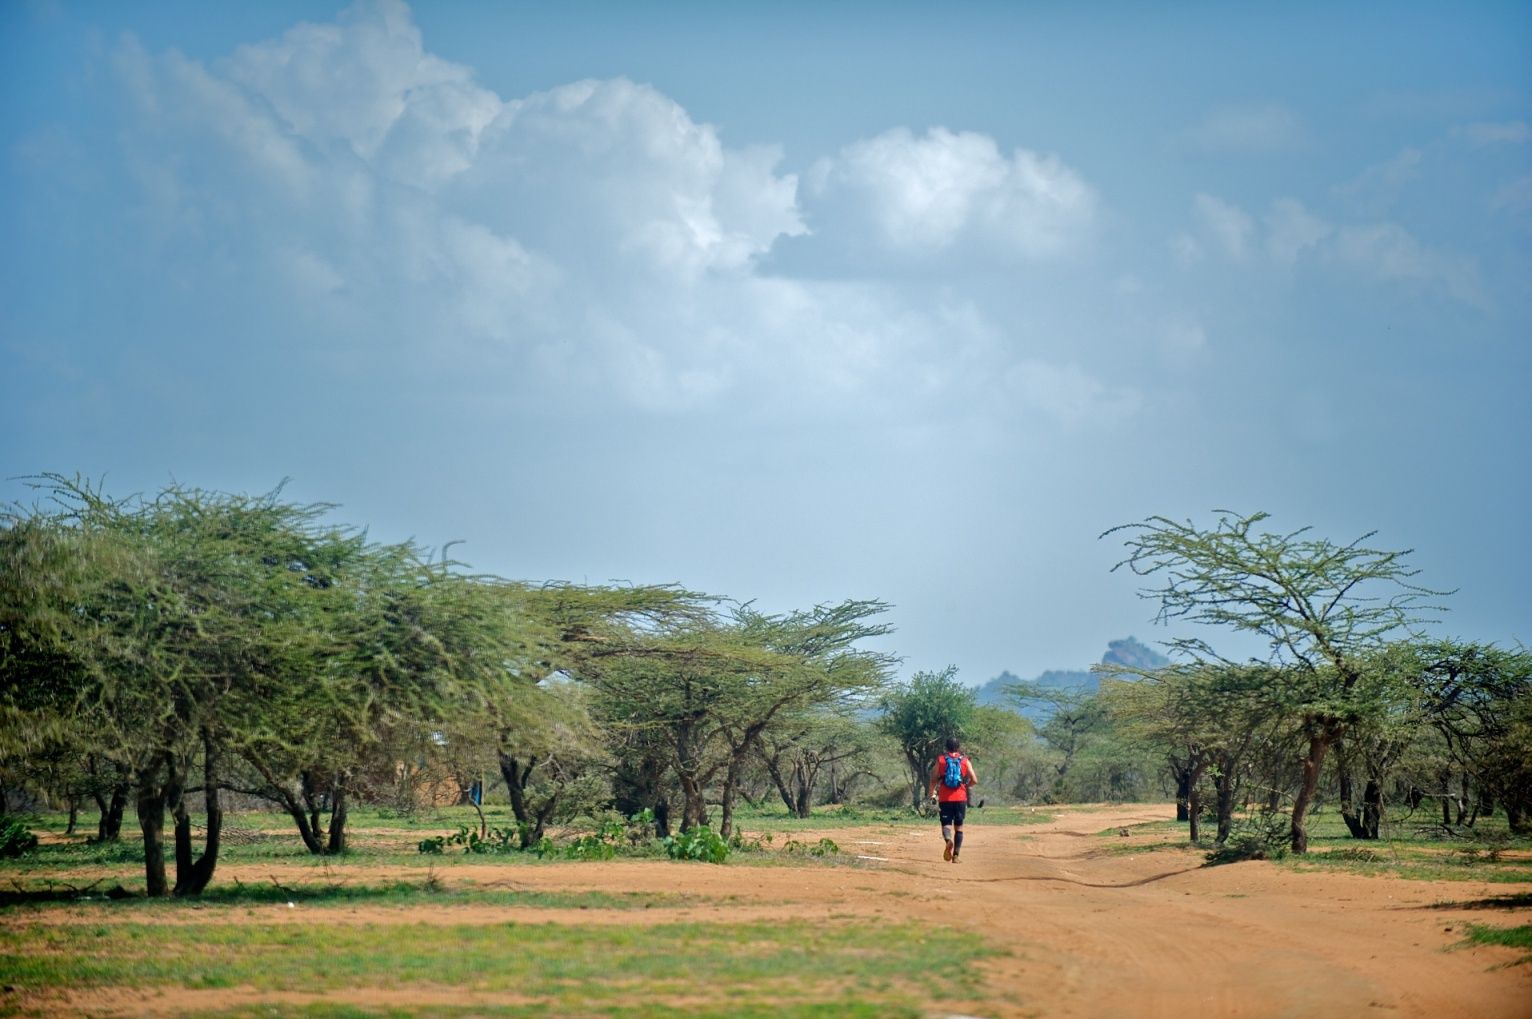 African adventure – international participants explore Kenya's raw wilderness. 